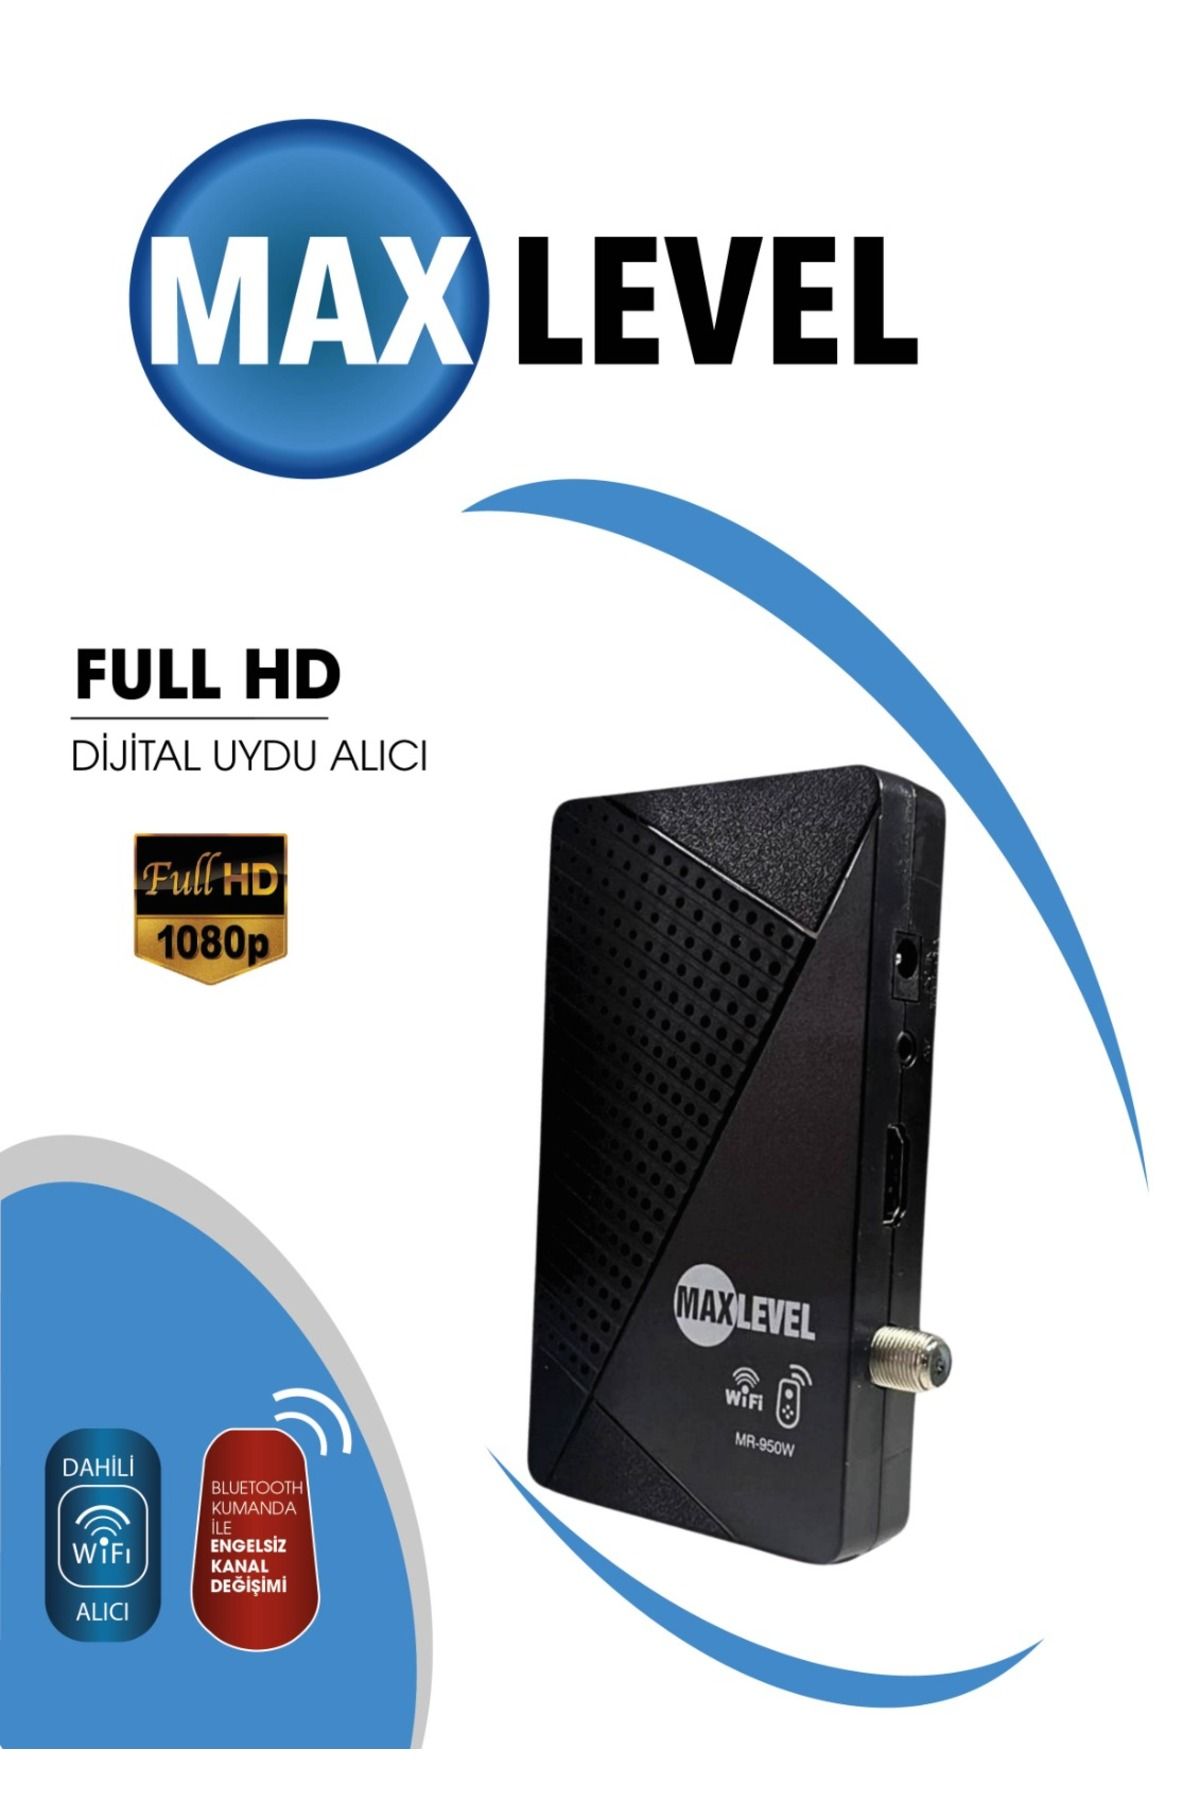 MAX LEVEL Maxlevel Hd Uydu Alıcı Bluetooth Kumandalı